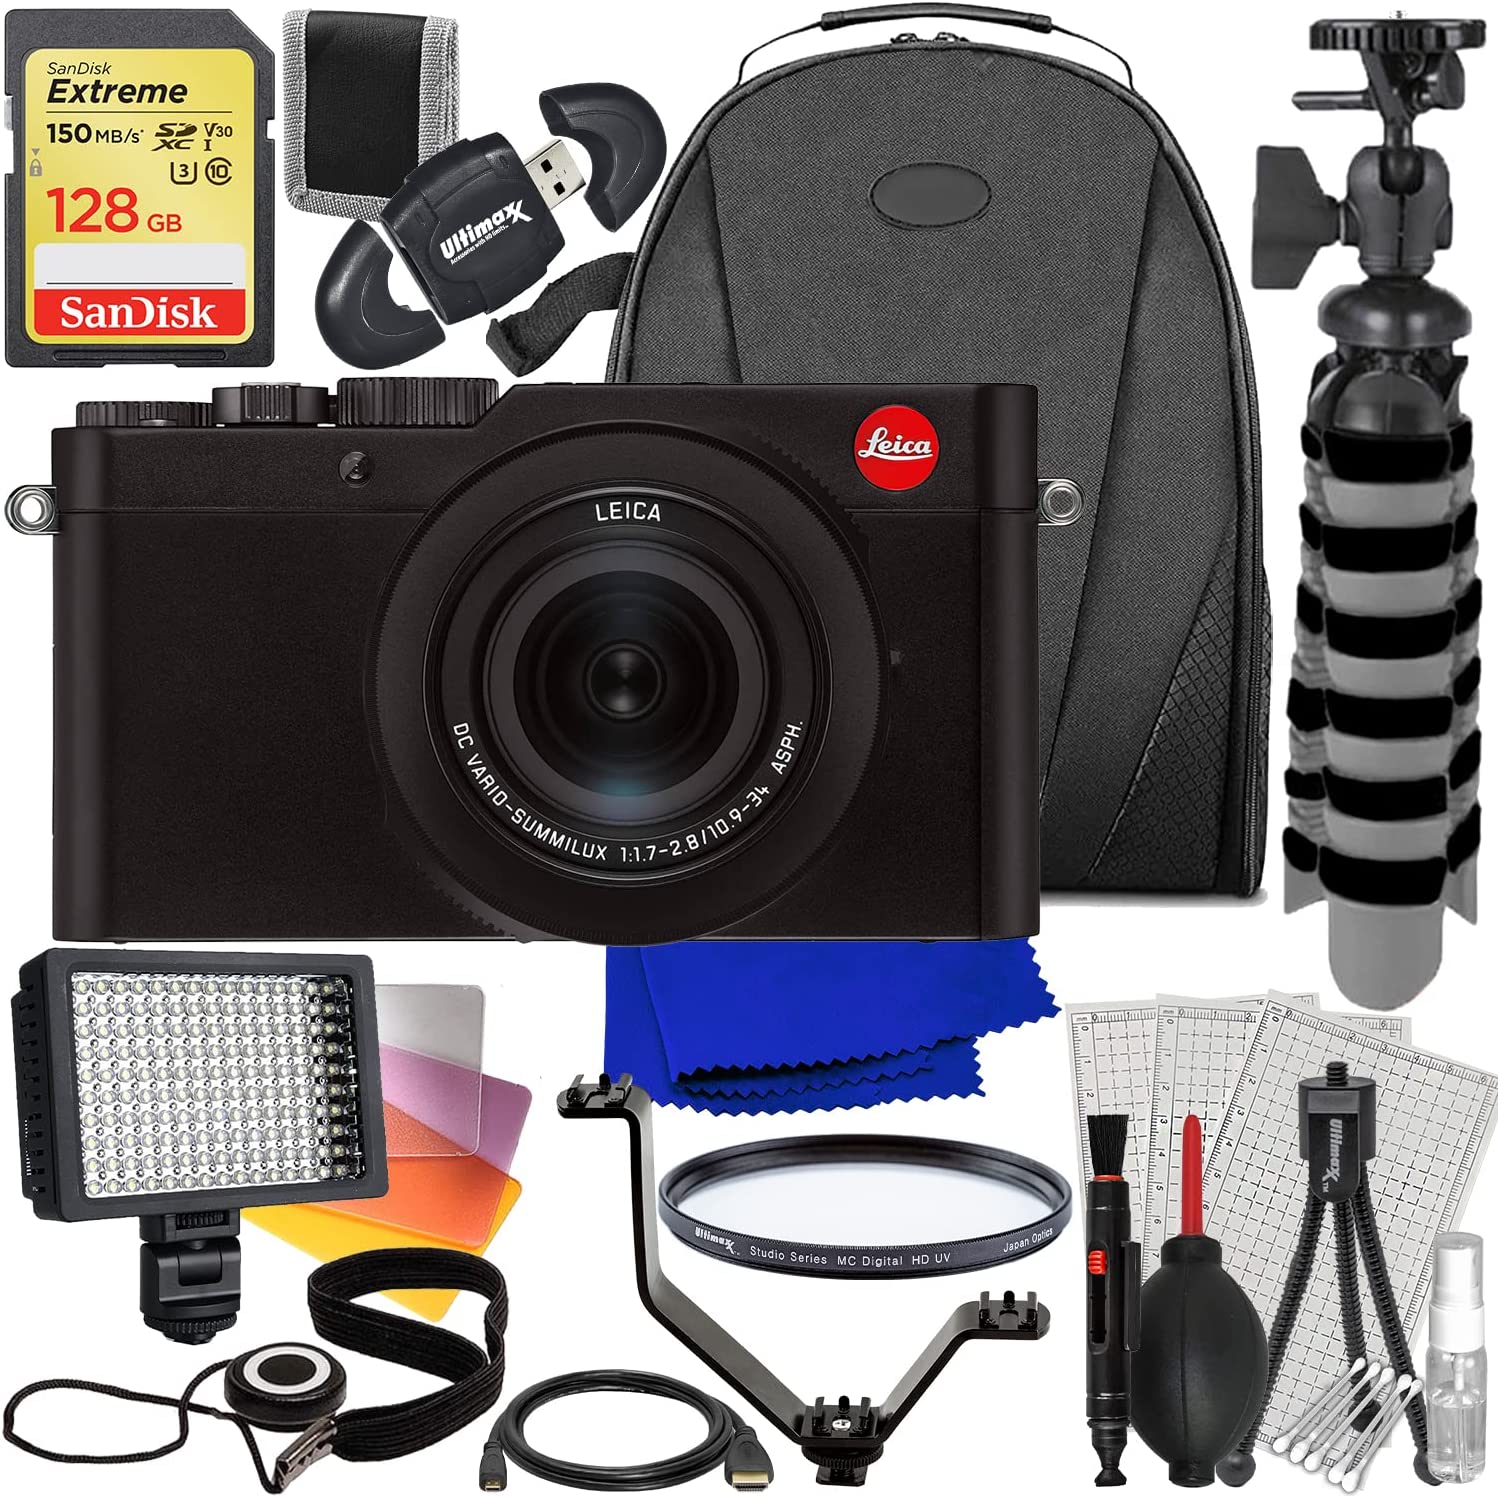 Leica D-Lux 7 Digital Camera (